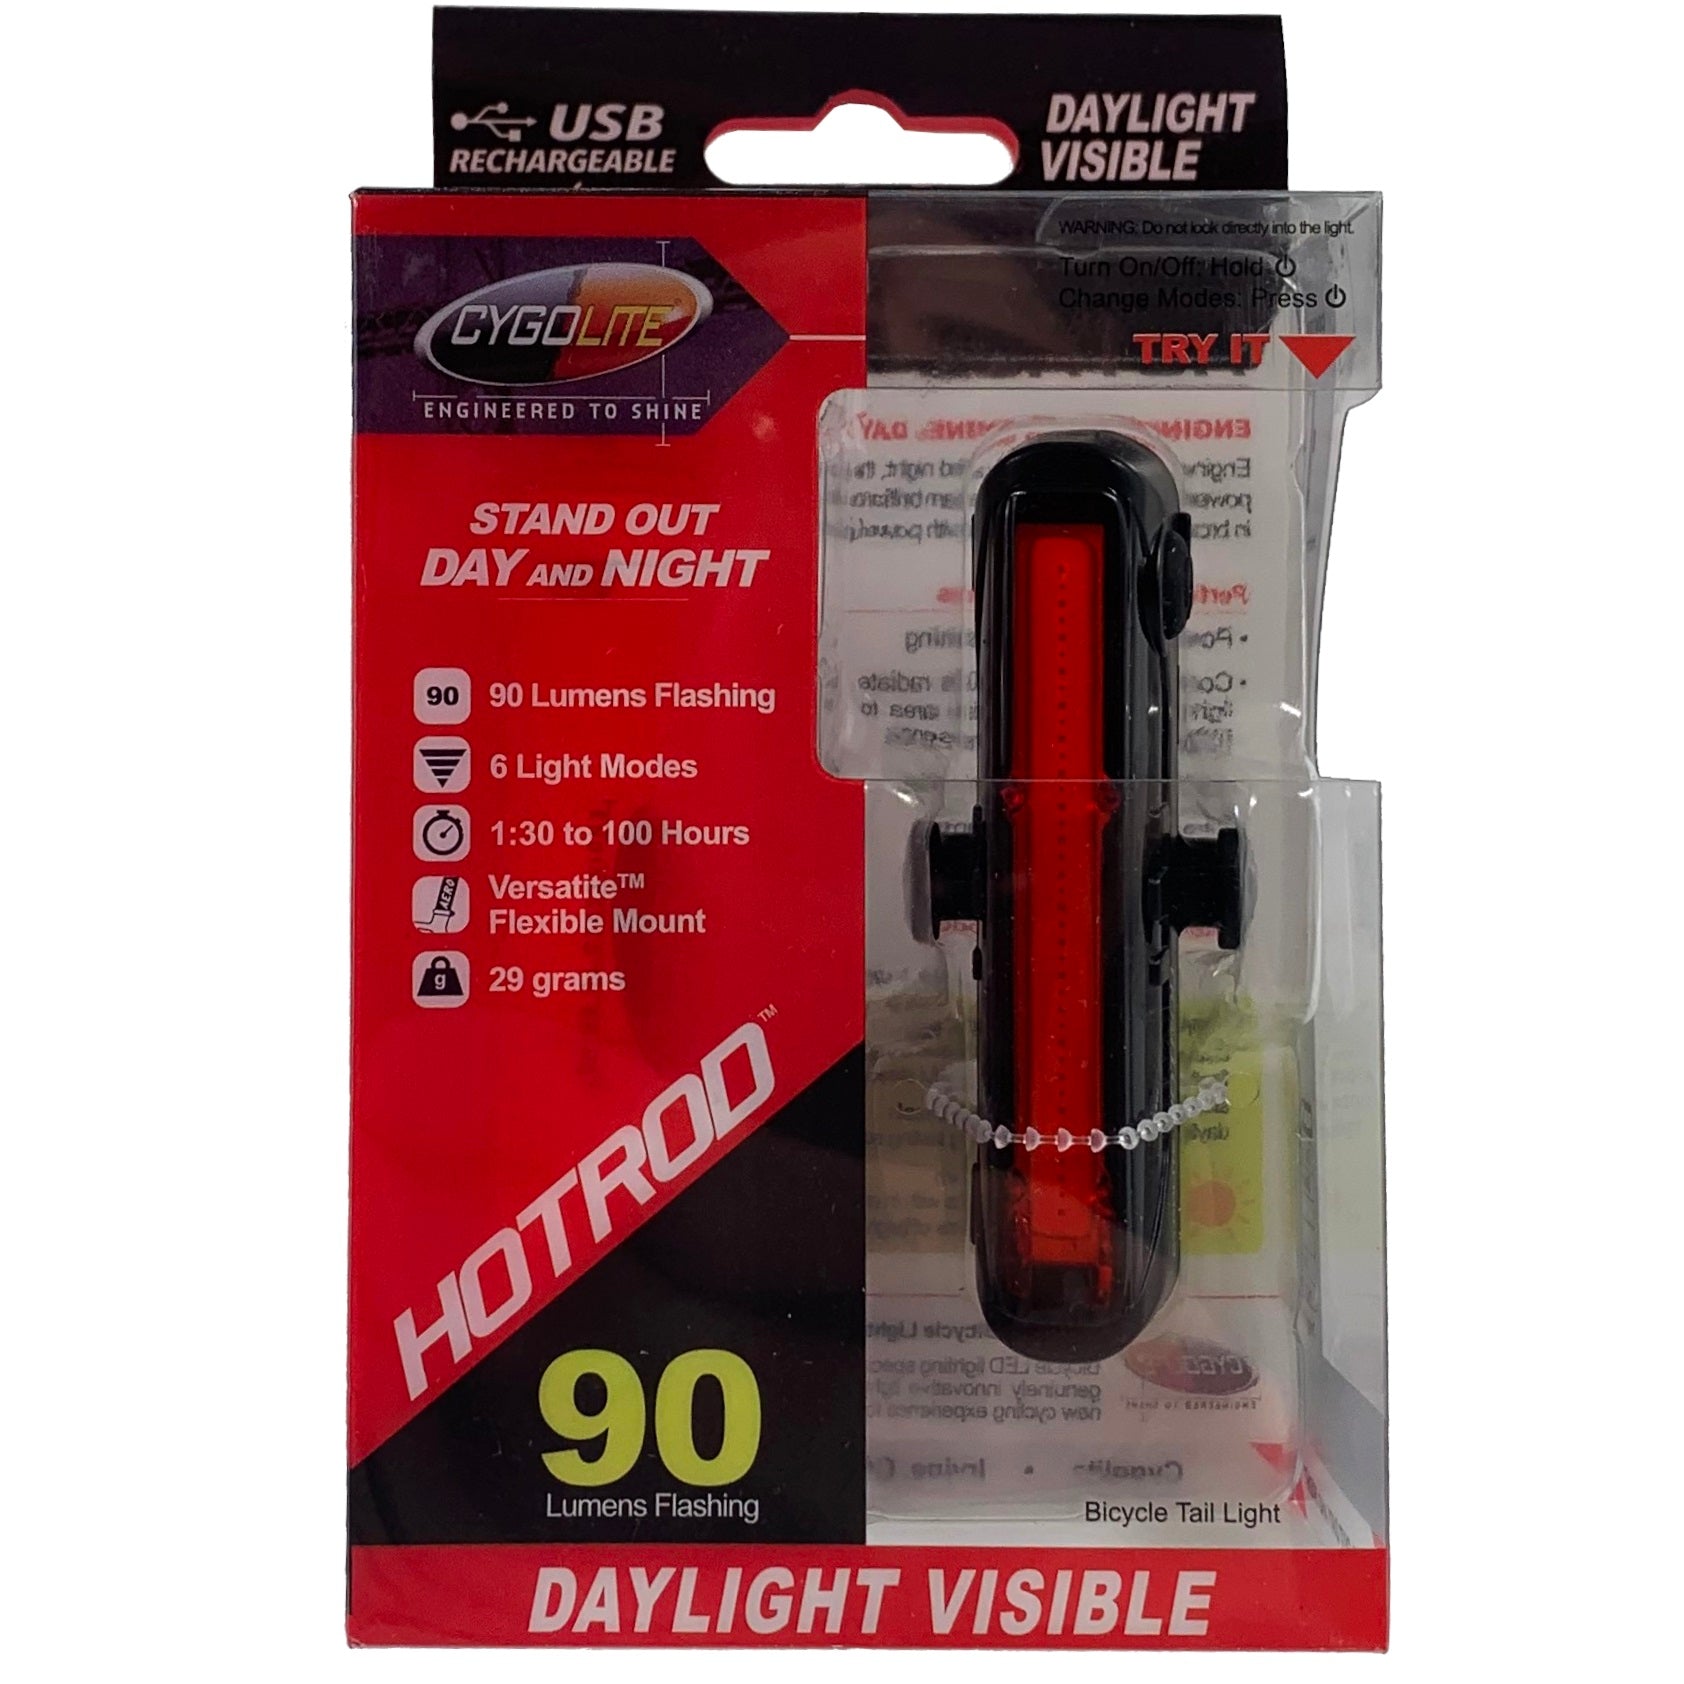 Cygolite Hotrod 90 USB Rechargeable Rear Tail Light